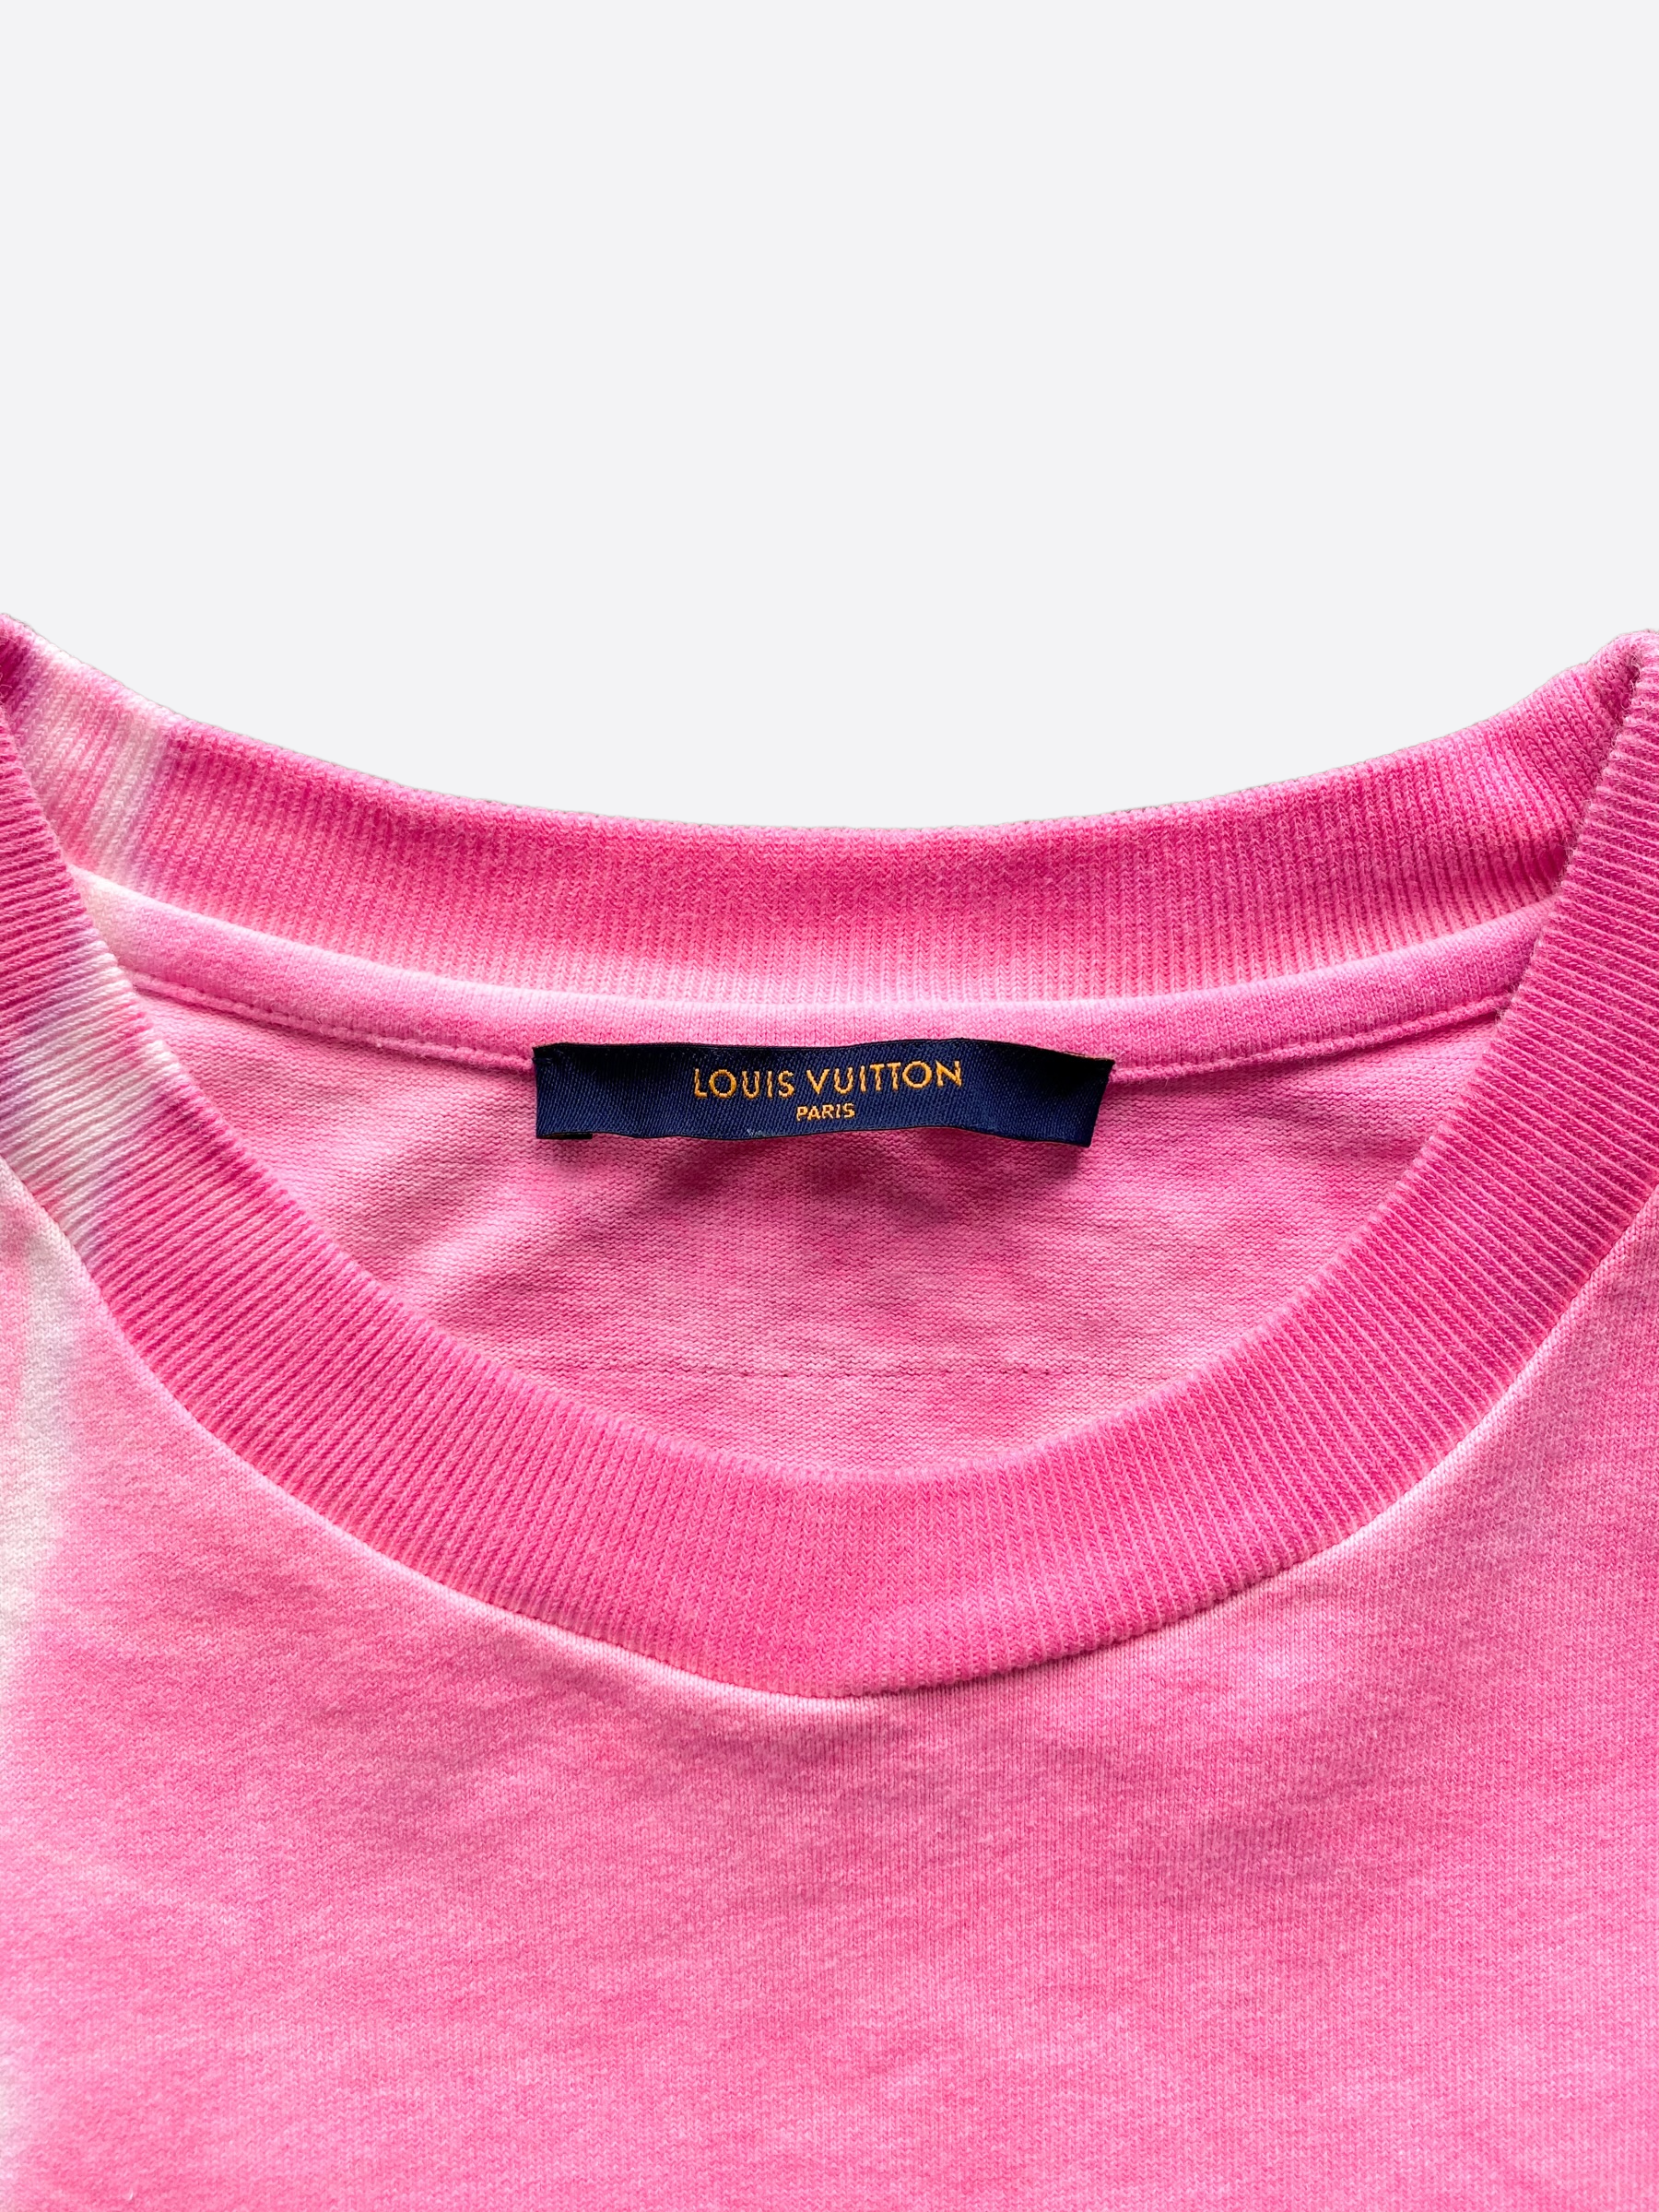 Louis Vuitton, Shirts, Louis Vuitton Ocean Tie Dye Tee